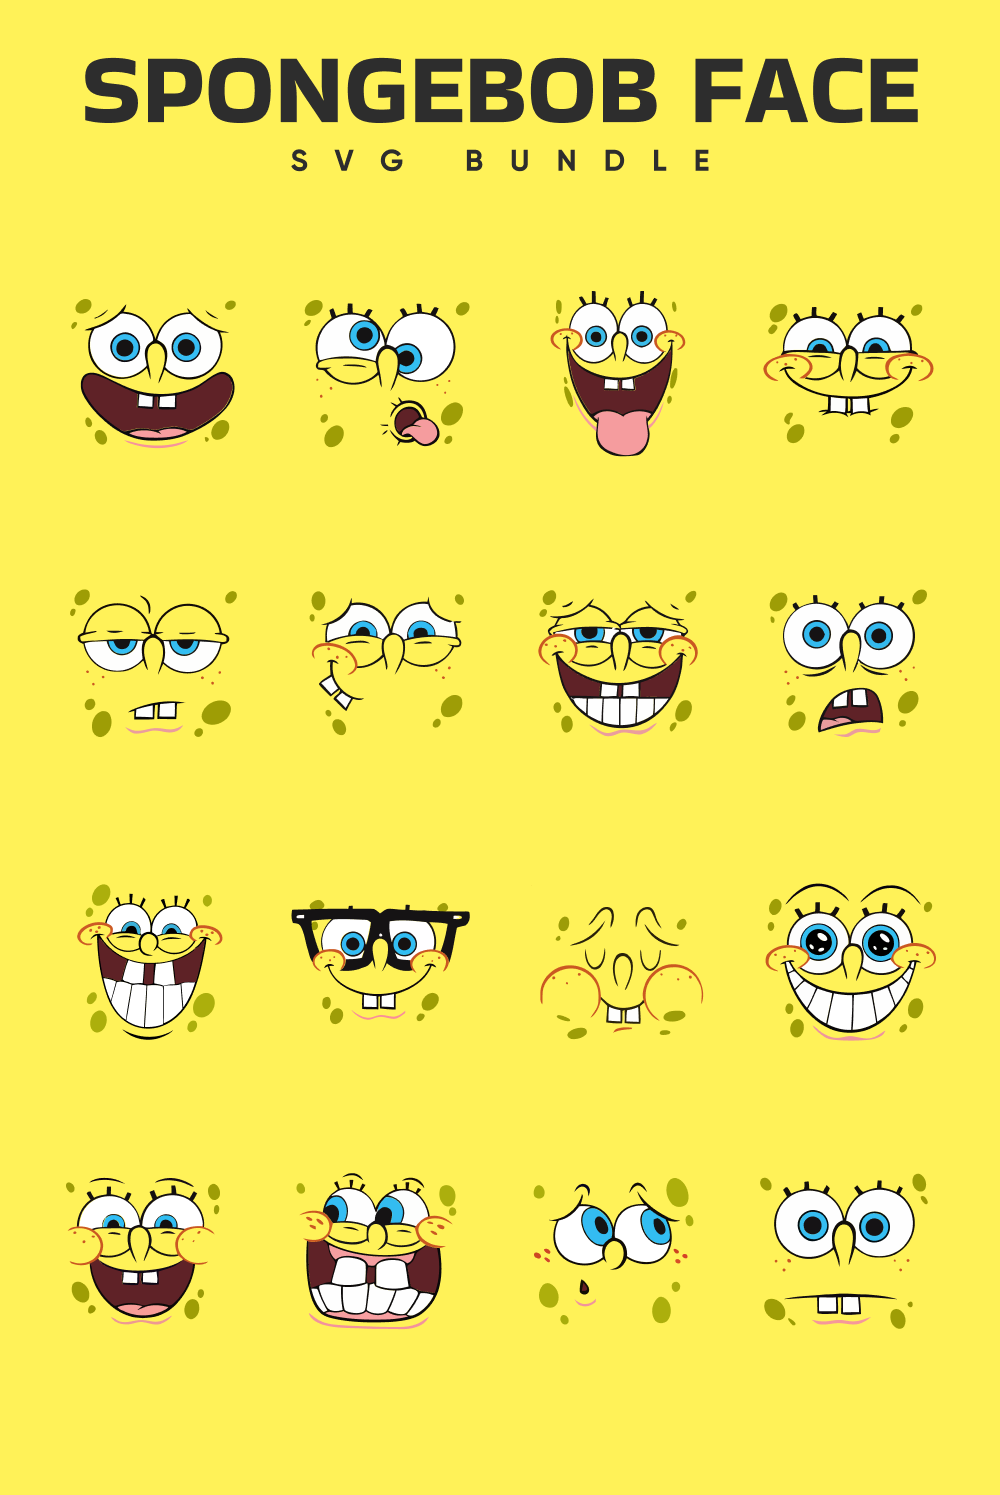 Funny sponge bob face collection.